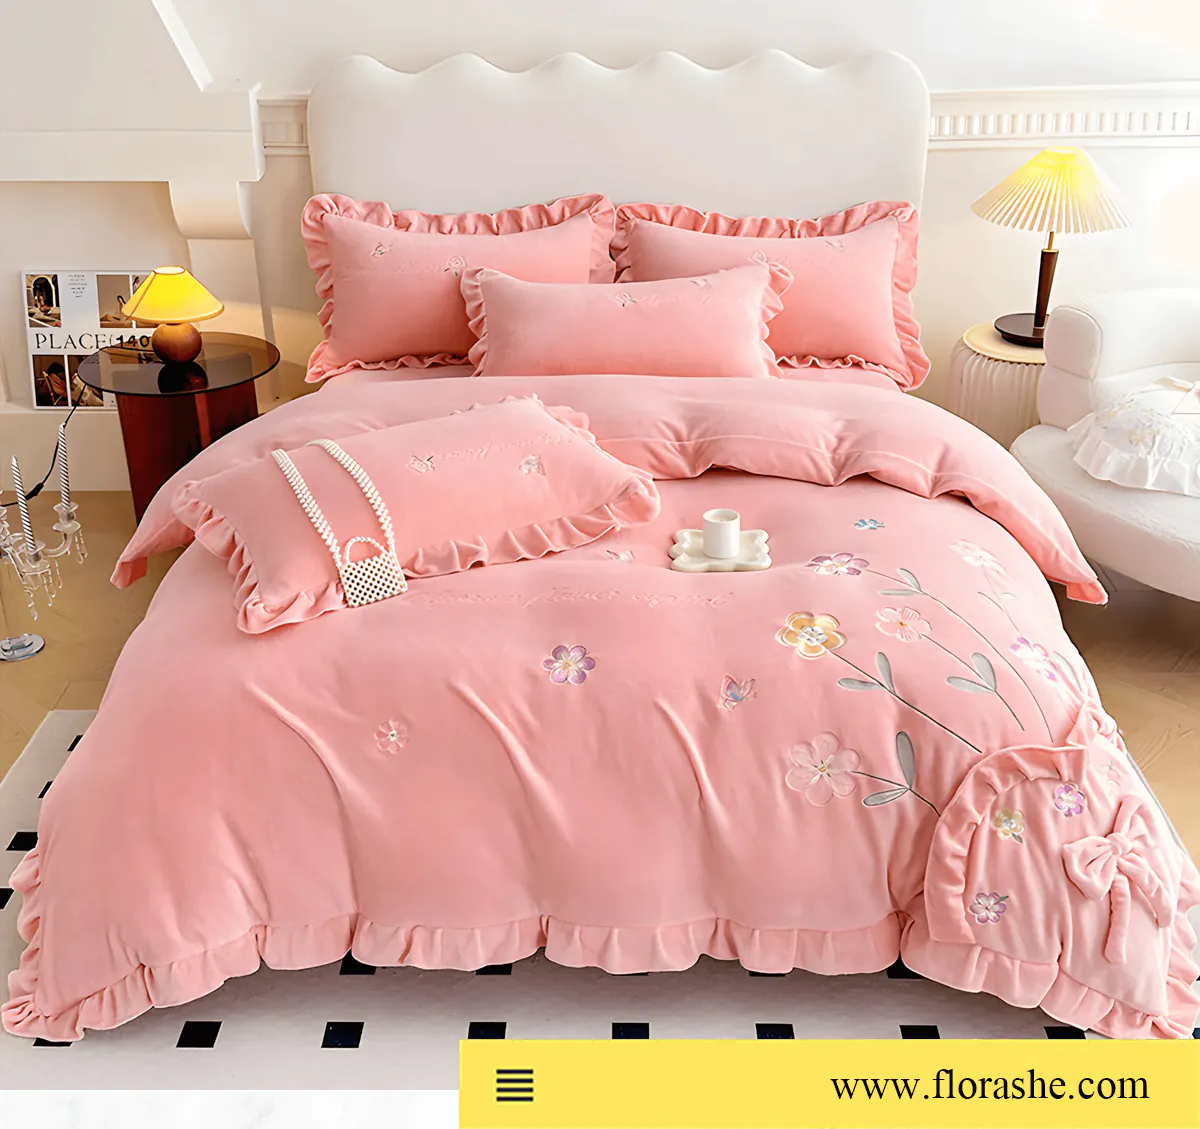 Romantic-Milk-Fiber-Comforter-Cover-Bed-Sheet-Pillowcases-4-Pcs-Set15